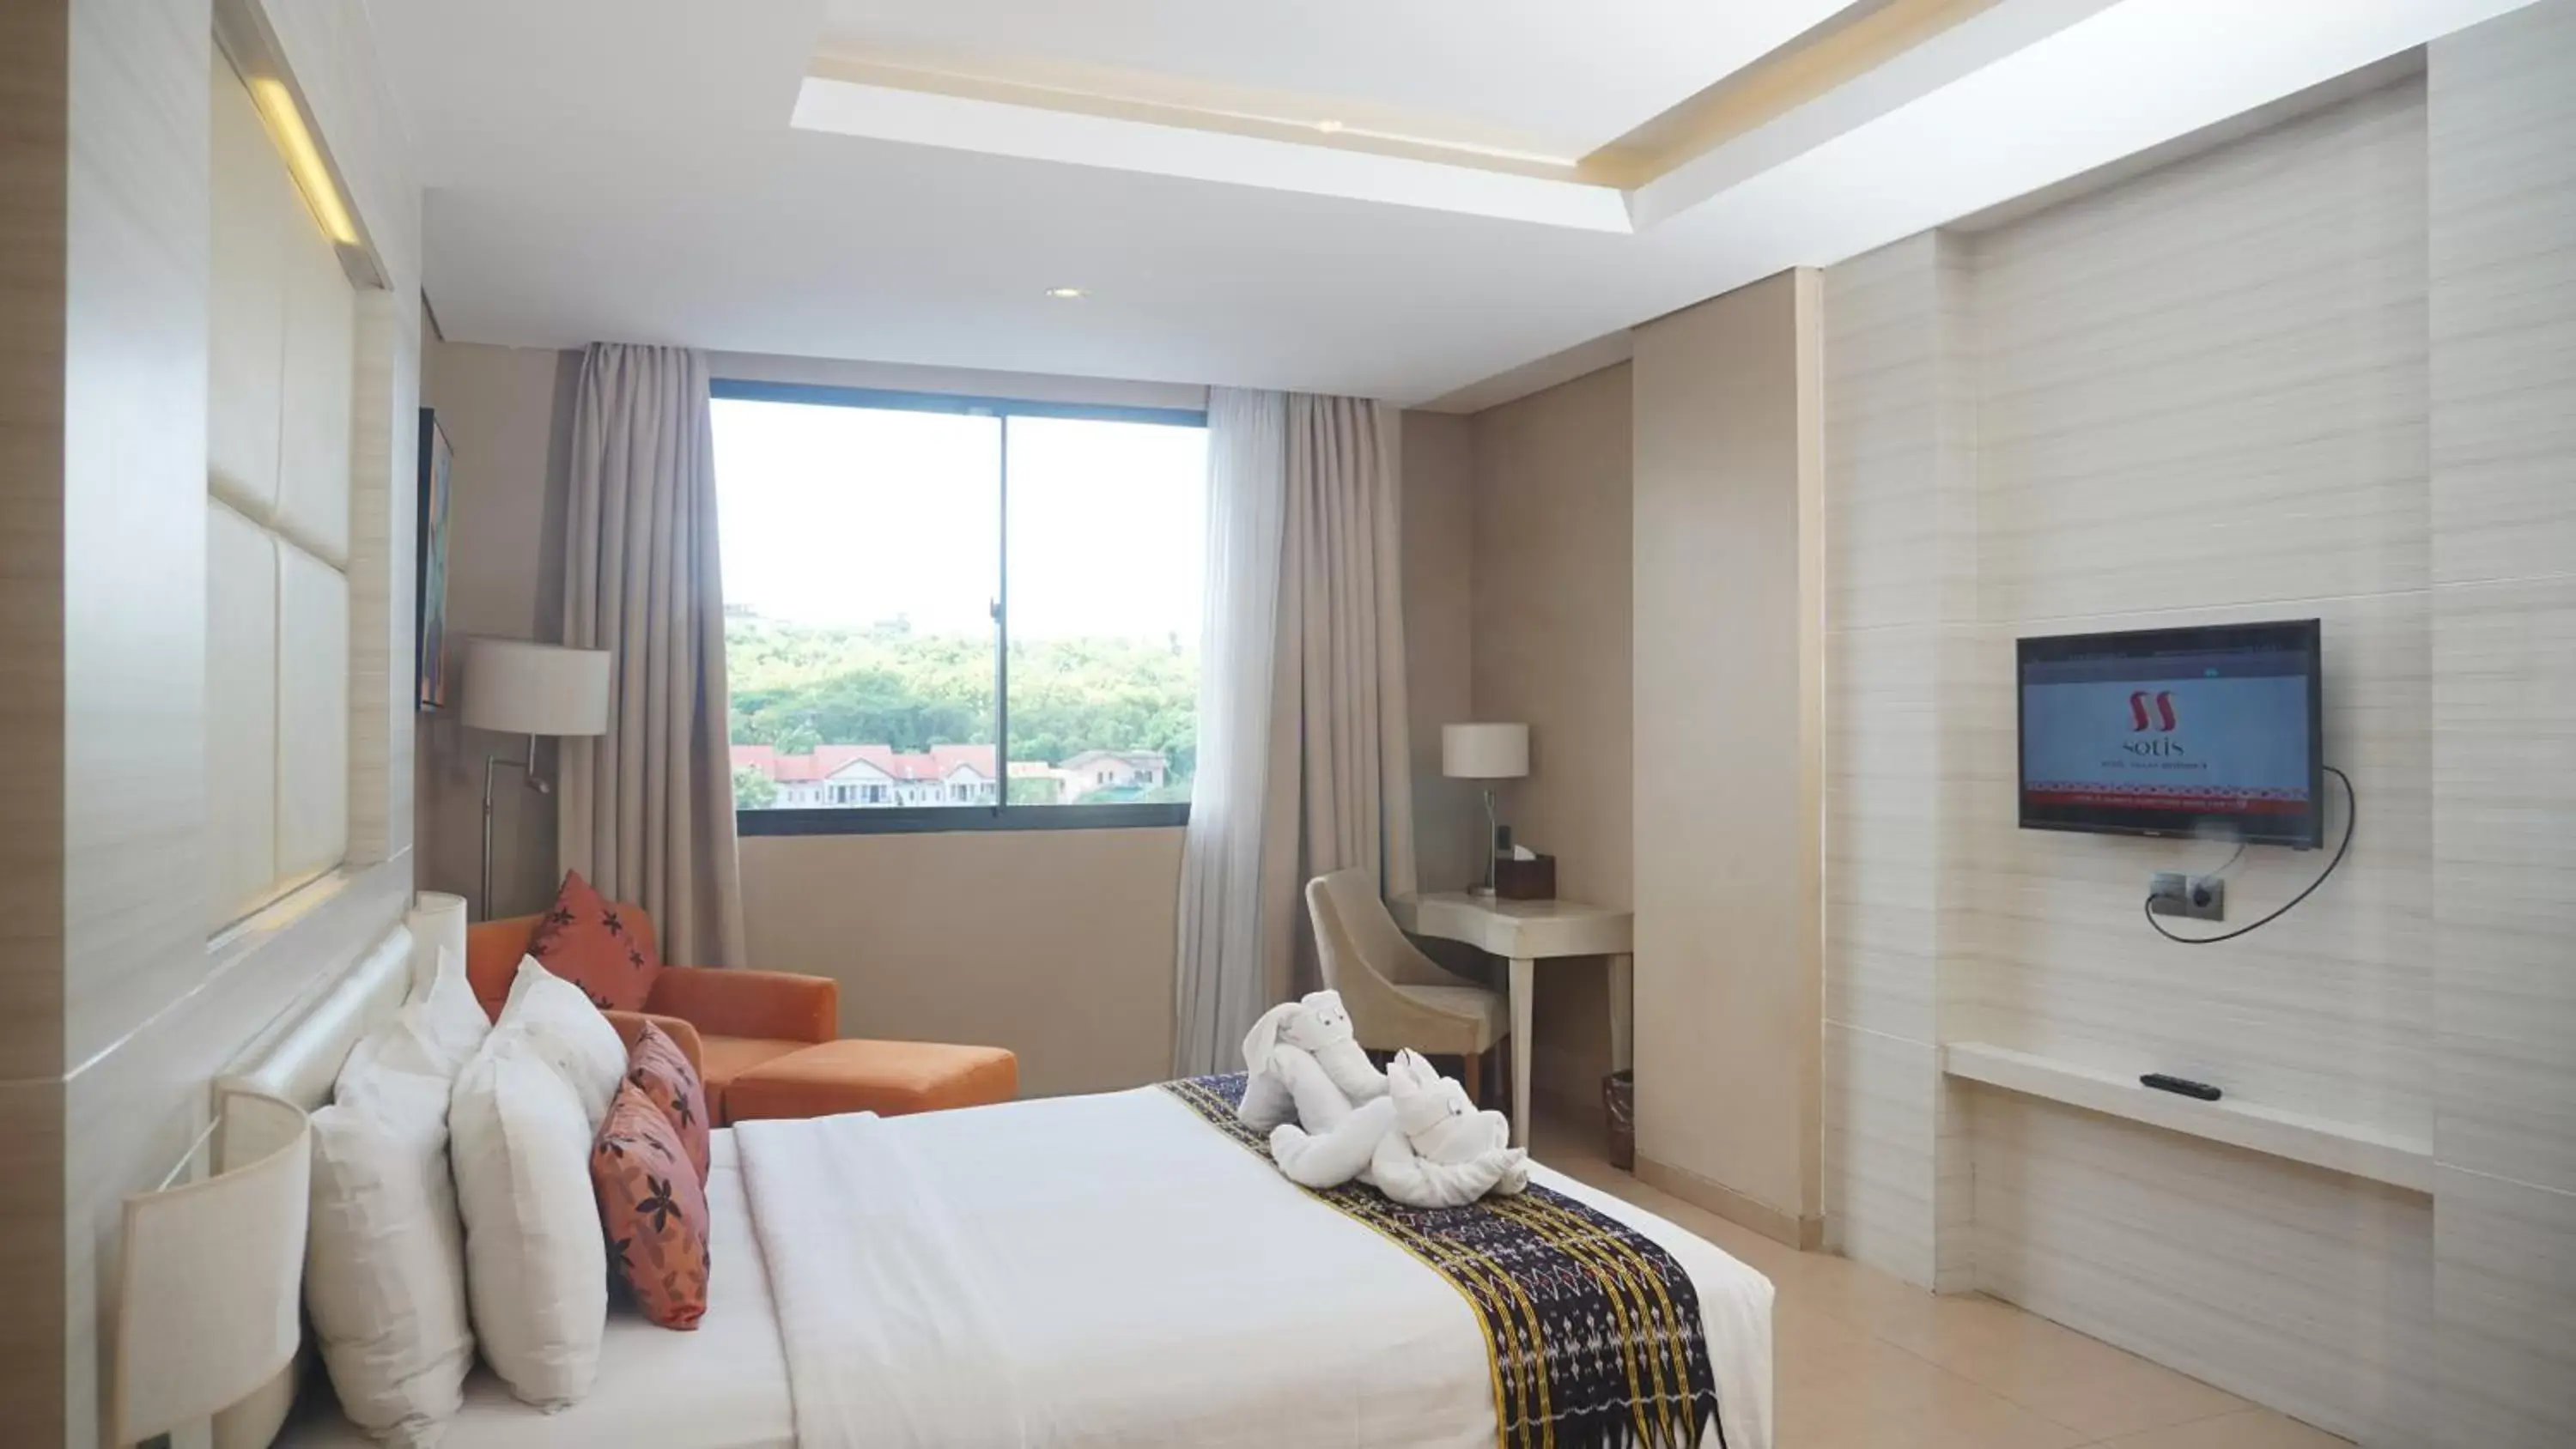 Bedroom in Sotis Hotel Kupang